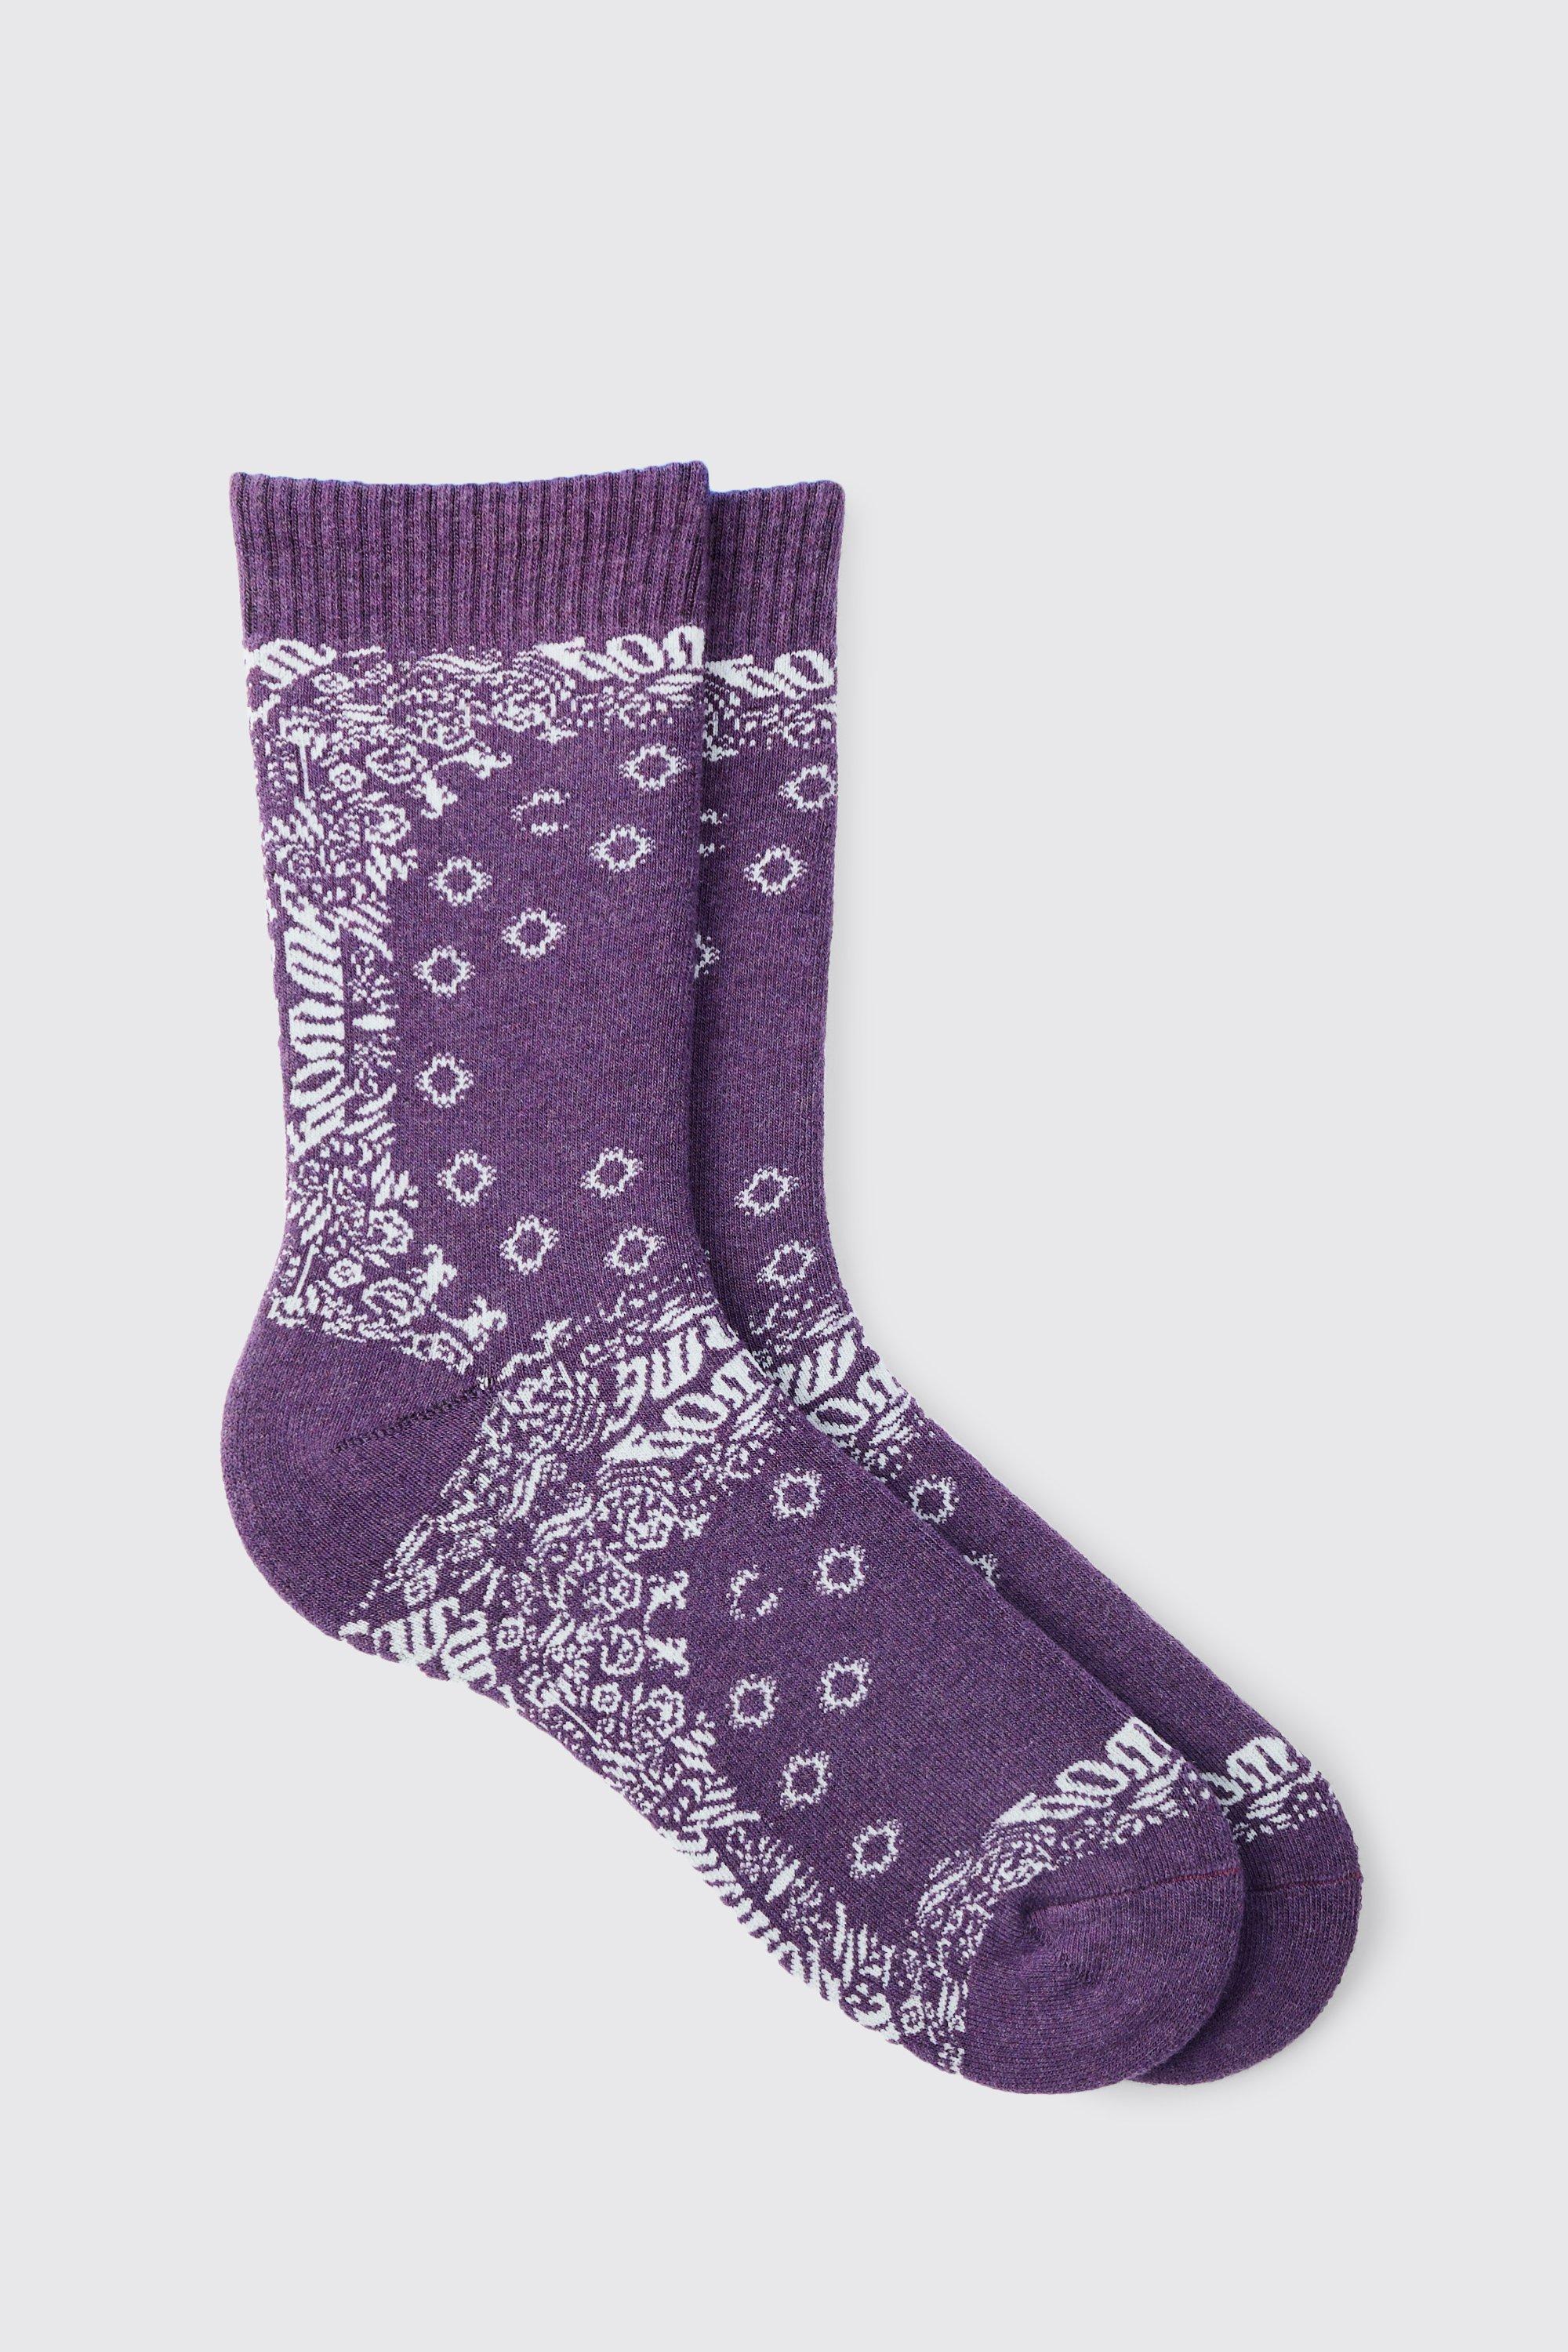 Image of Bandana Print Socks, Purple